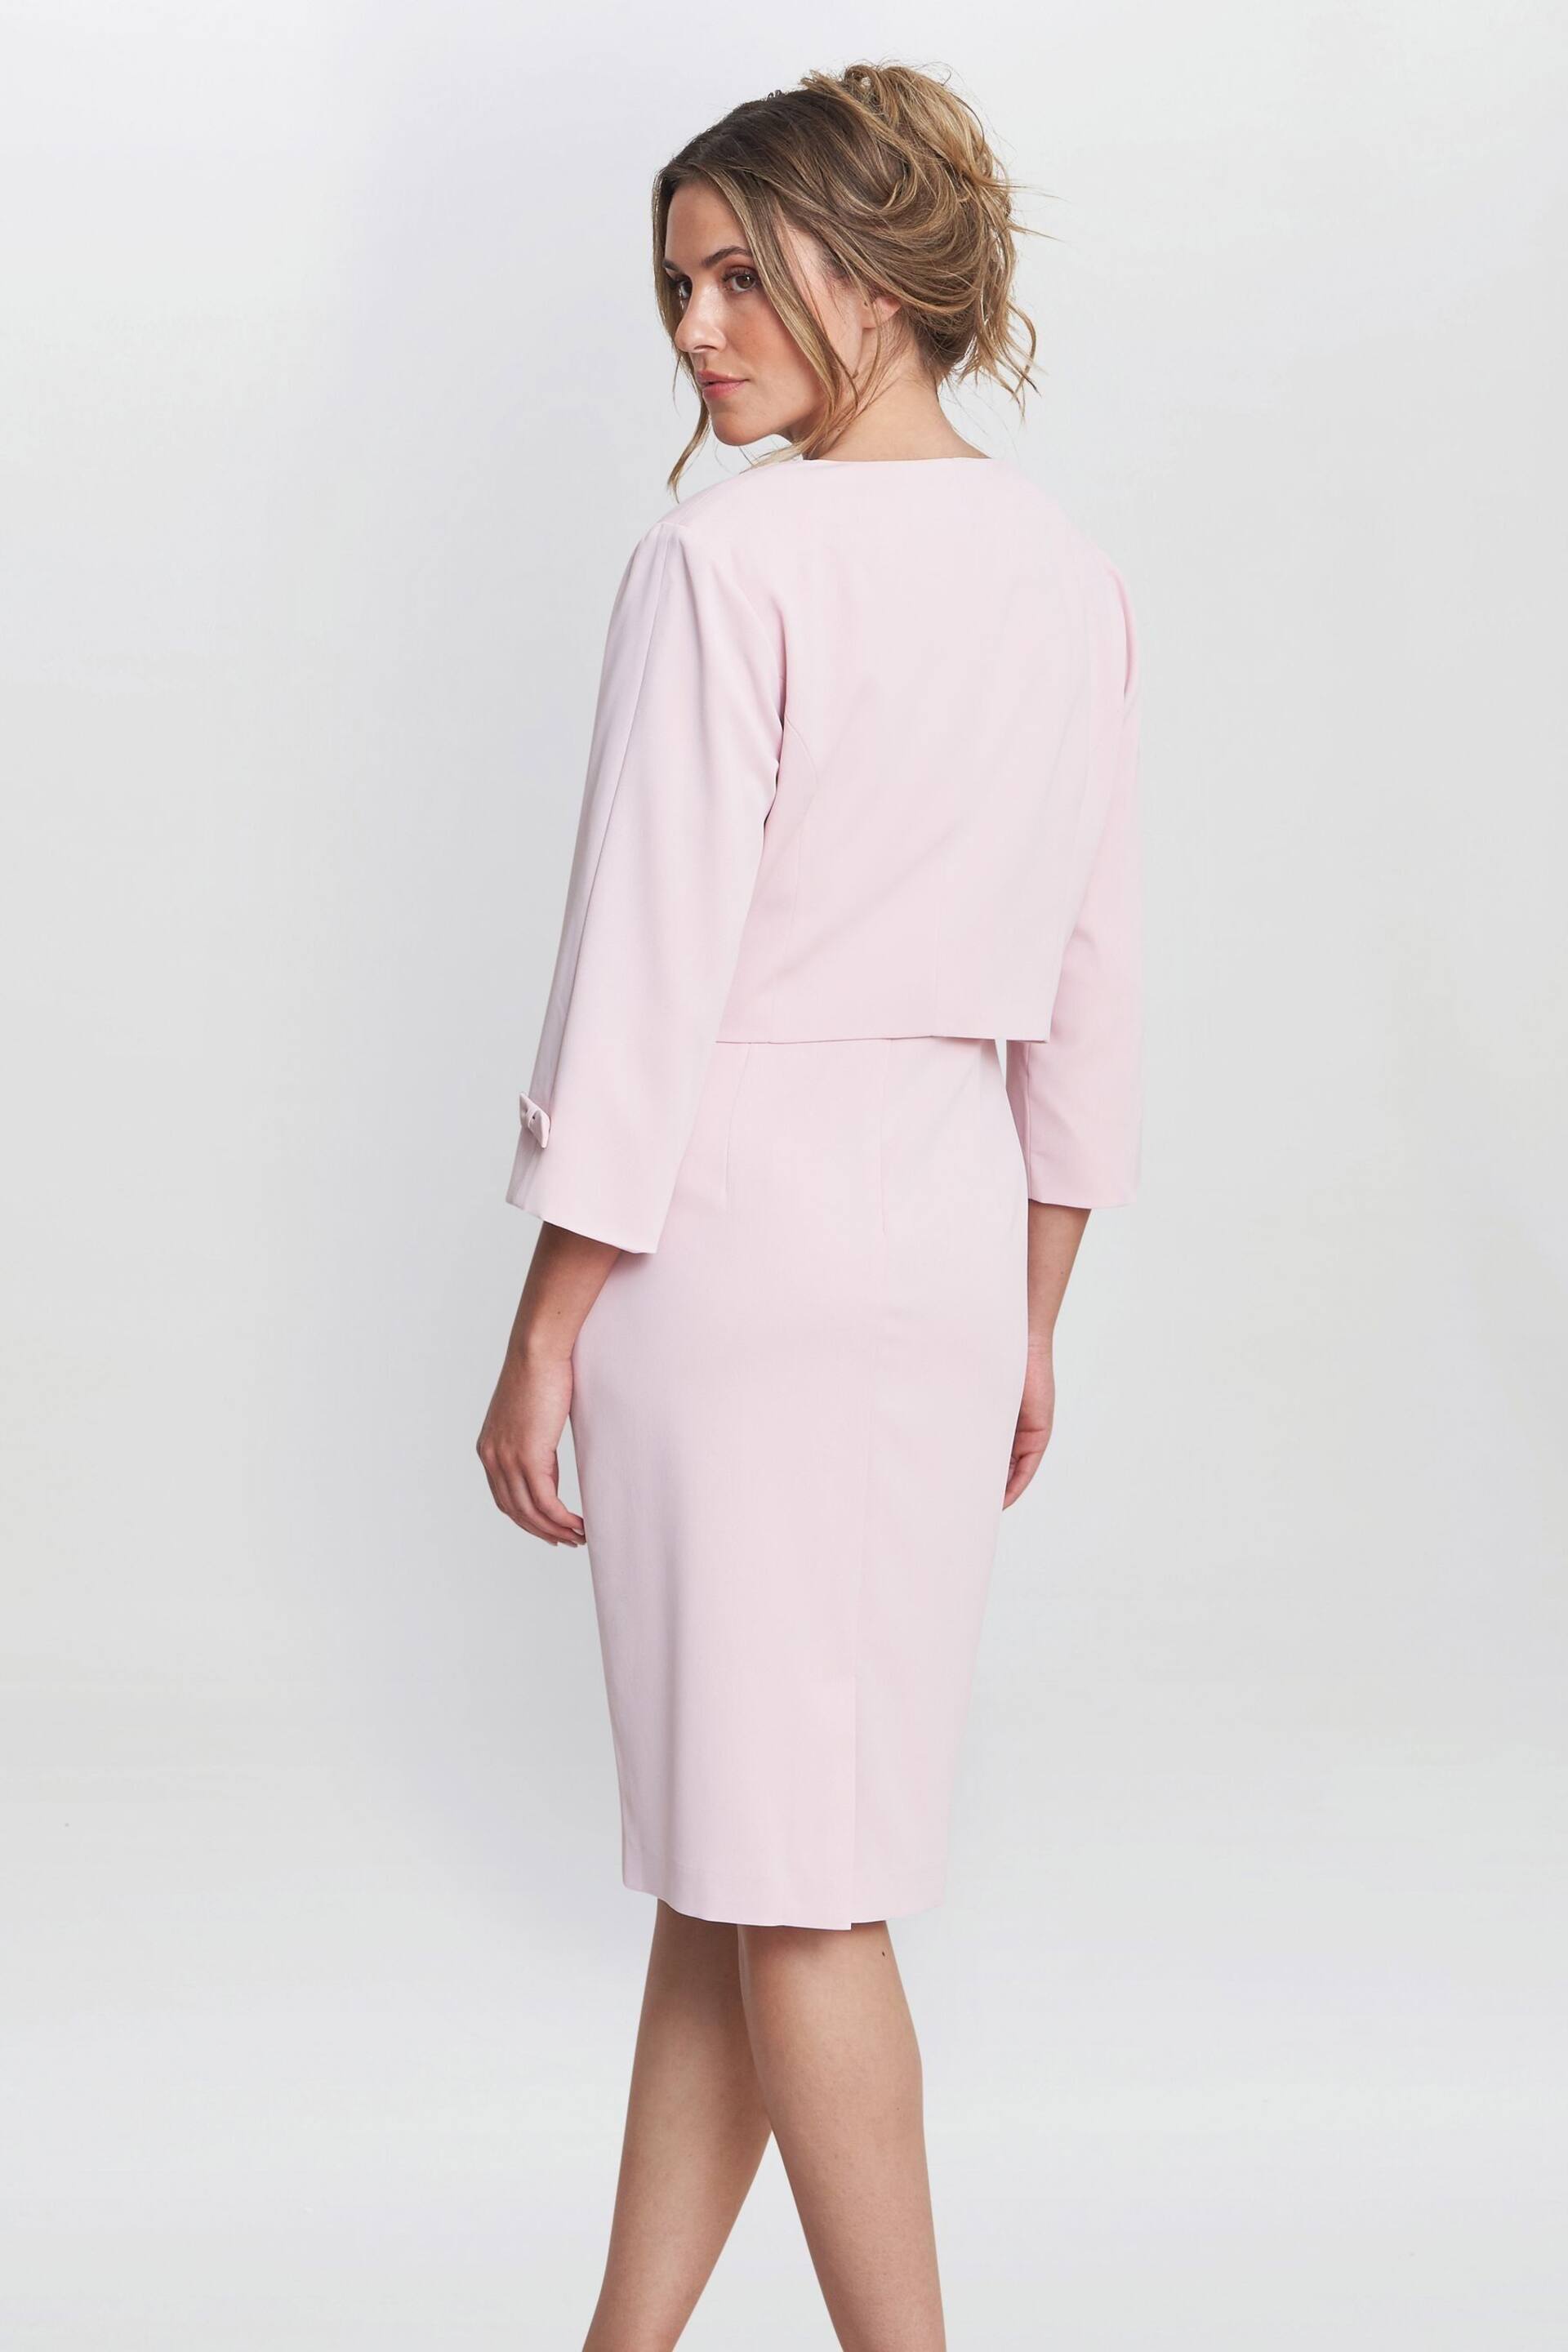 Gina Bacconi Pink Corinne Crepe Dress And Jacket - Image 2 of 6